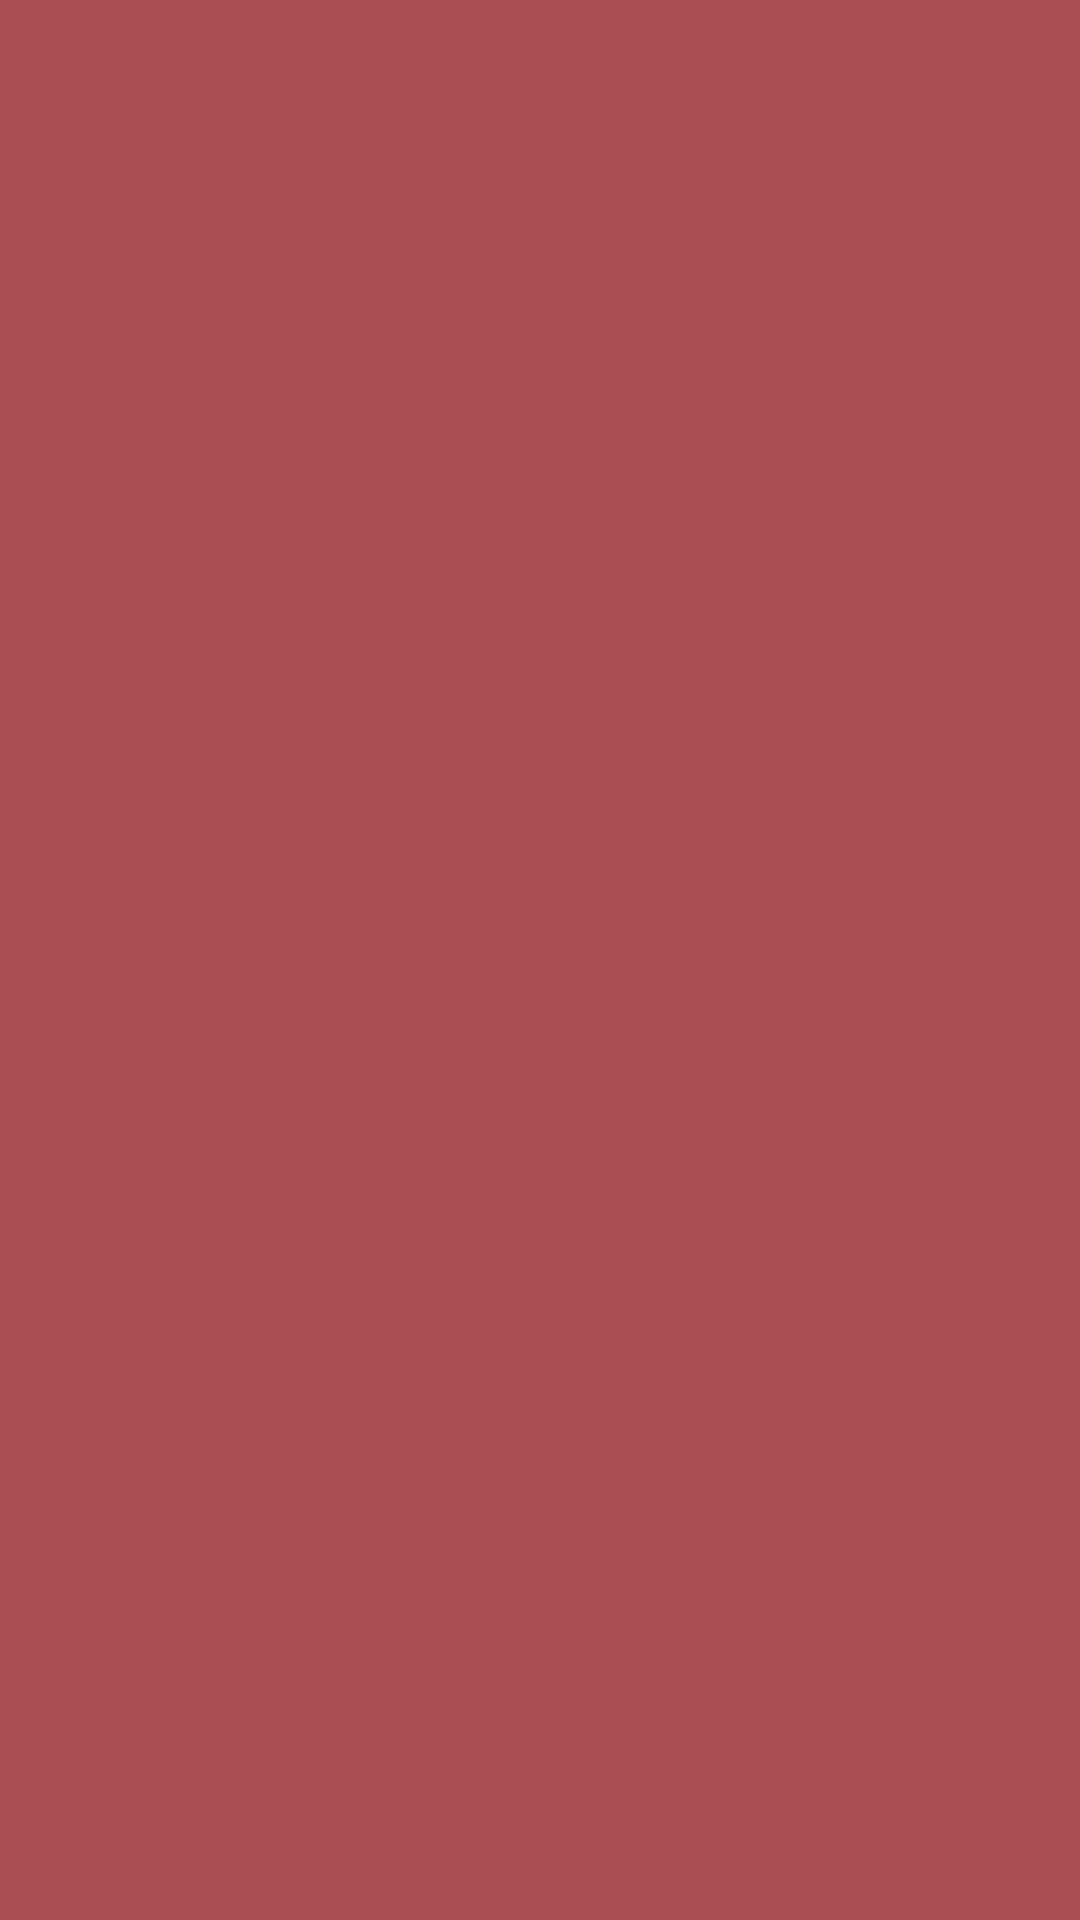 1080x1920 Rose Vale Solid Color Background